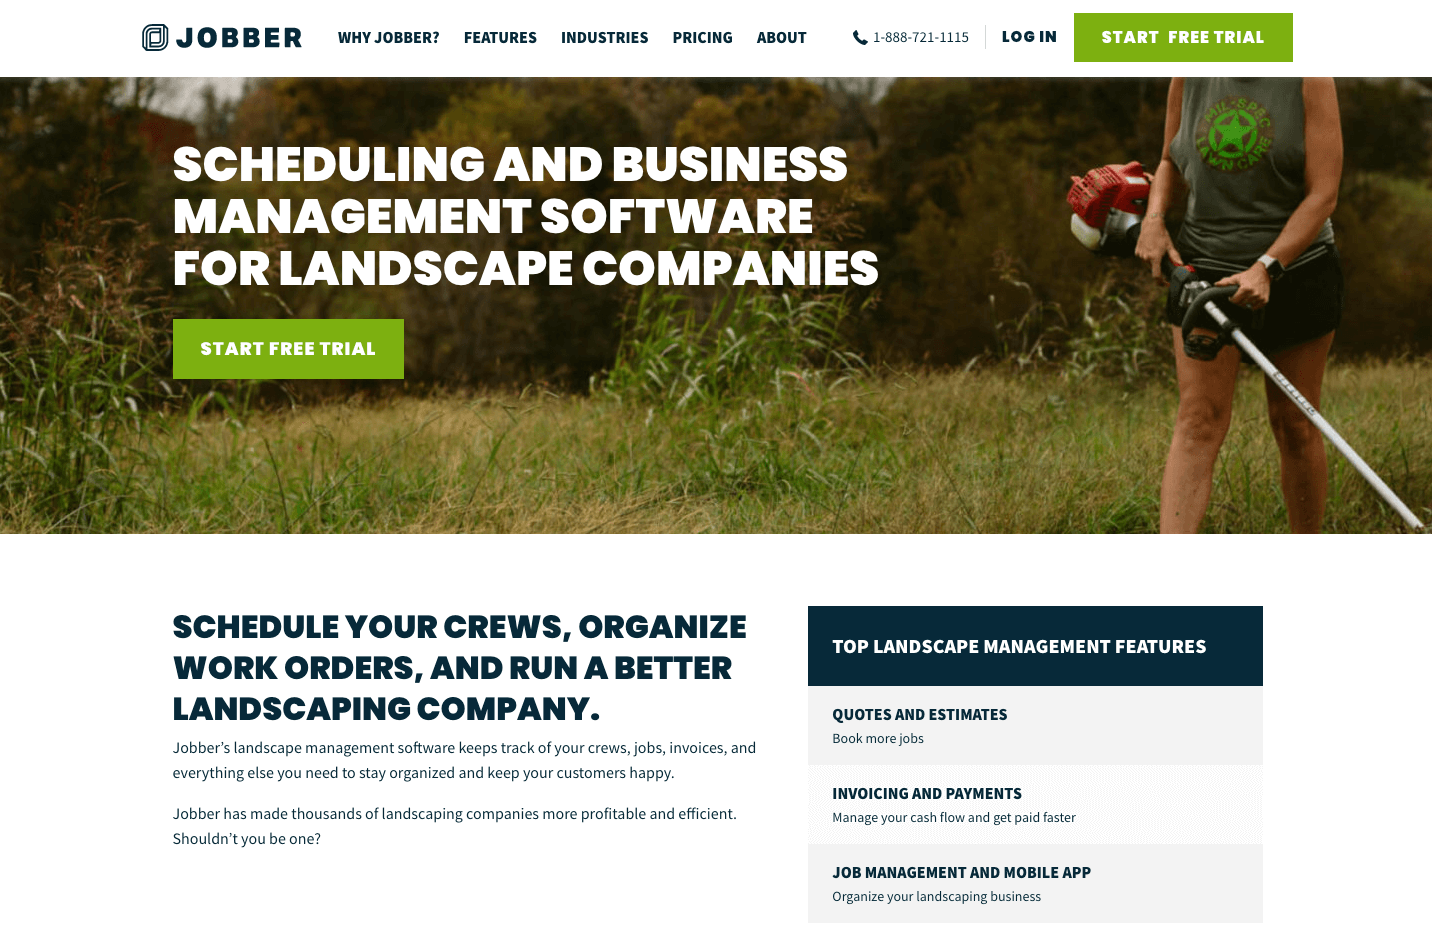 Jobber landscaping software